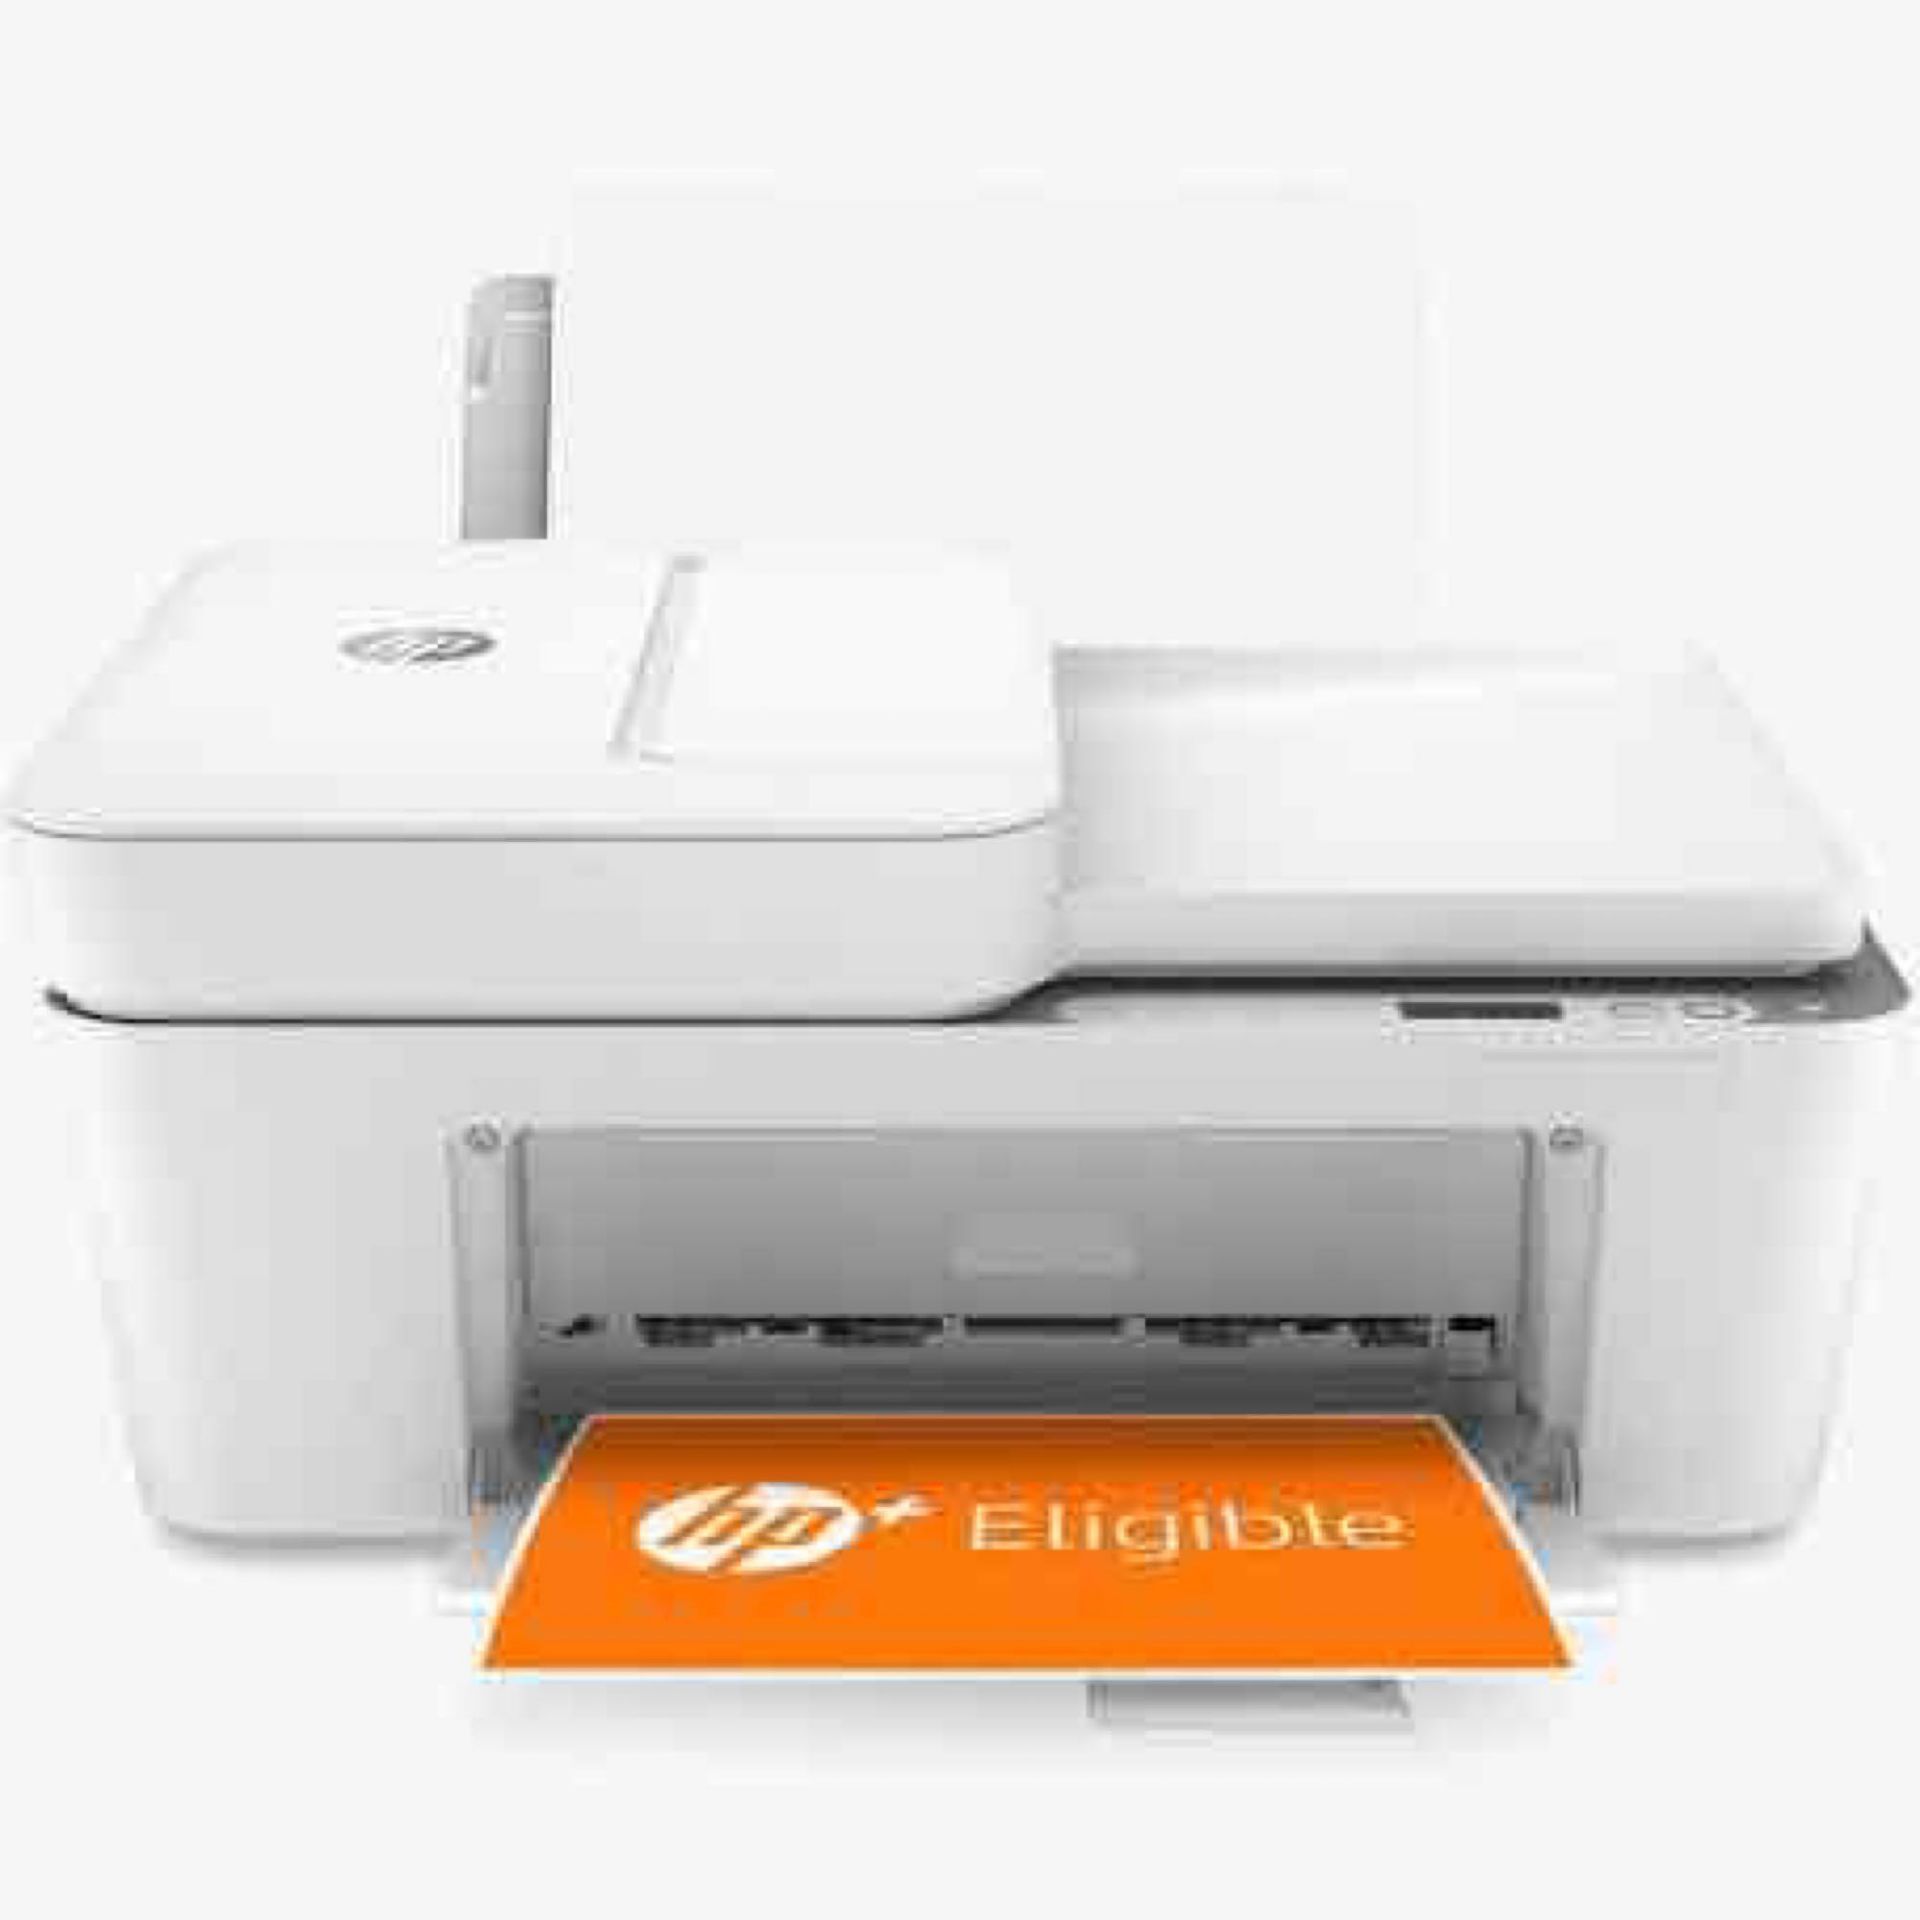 (Jb) RRP £100 Lot To Contain 1 Boxed Hp Deskjet 4120E Wireless Smart Printer